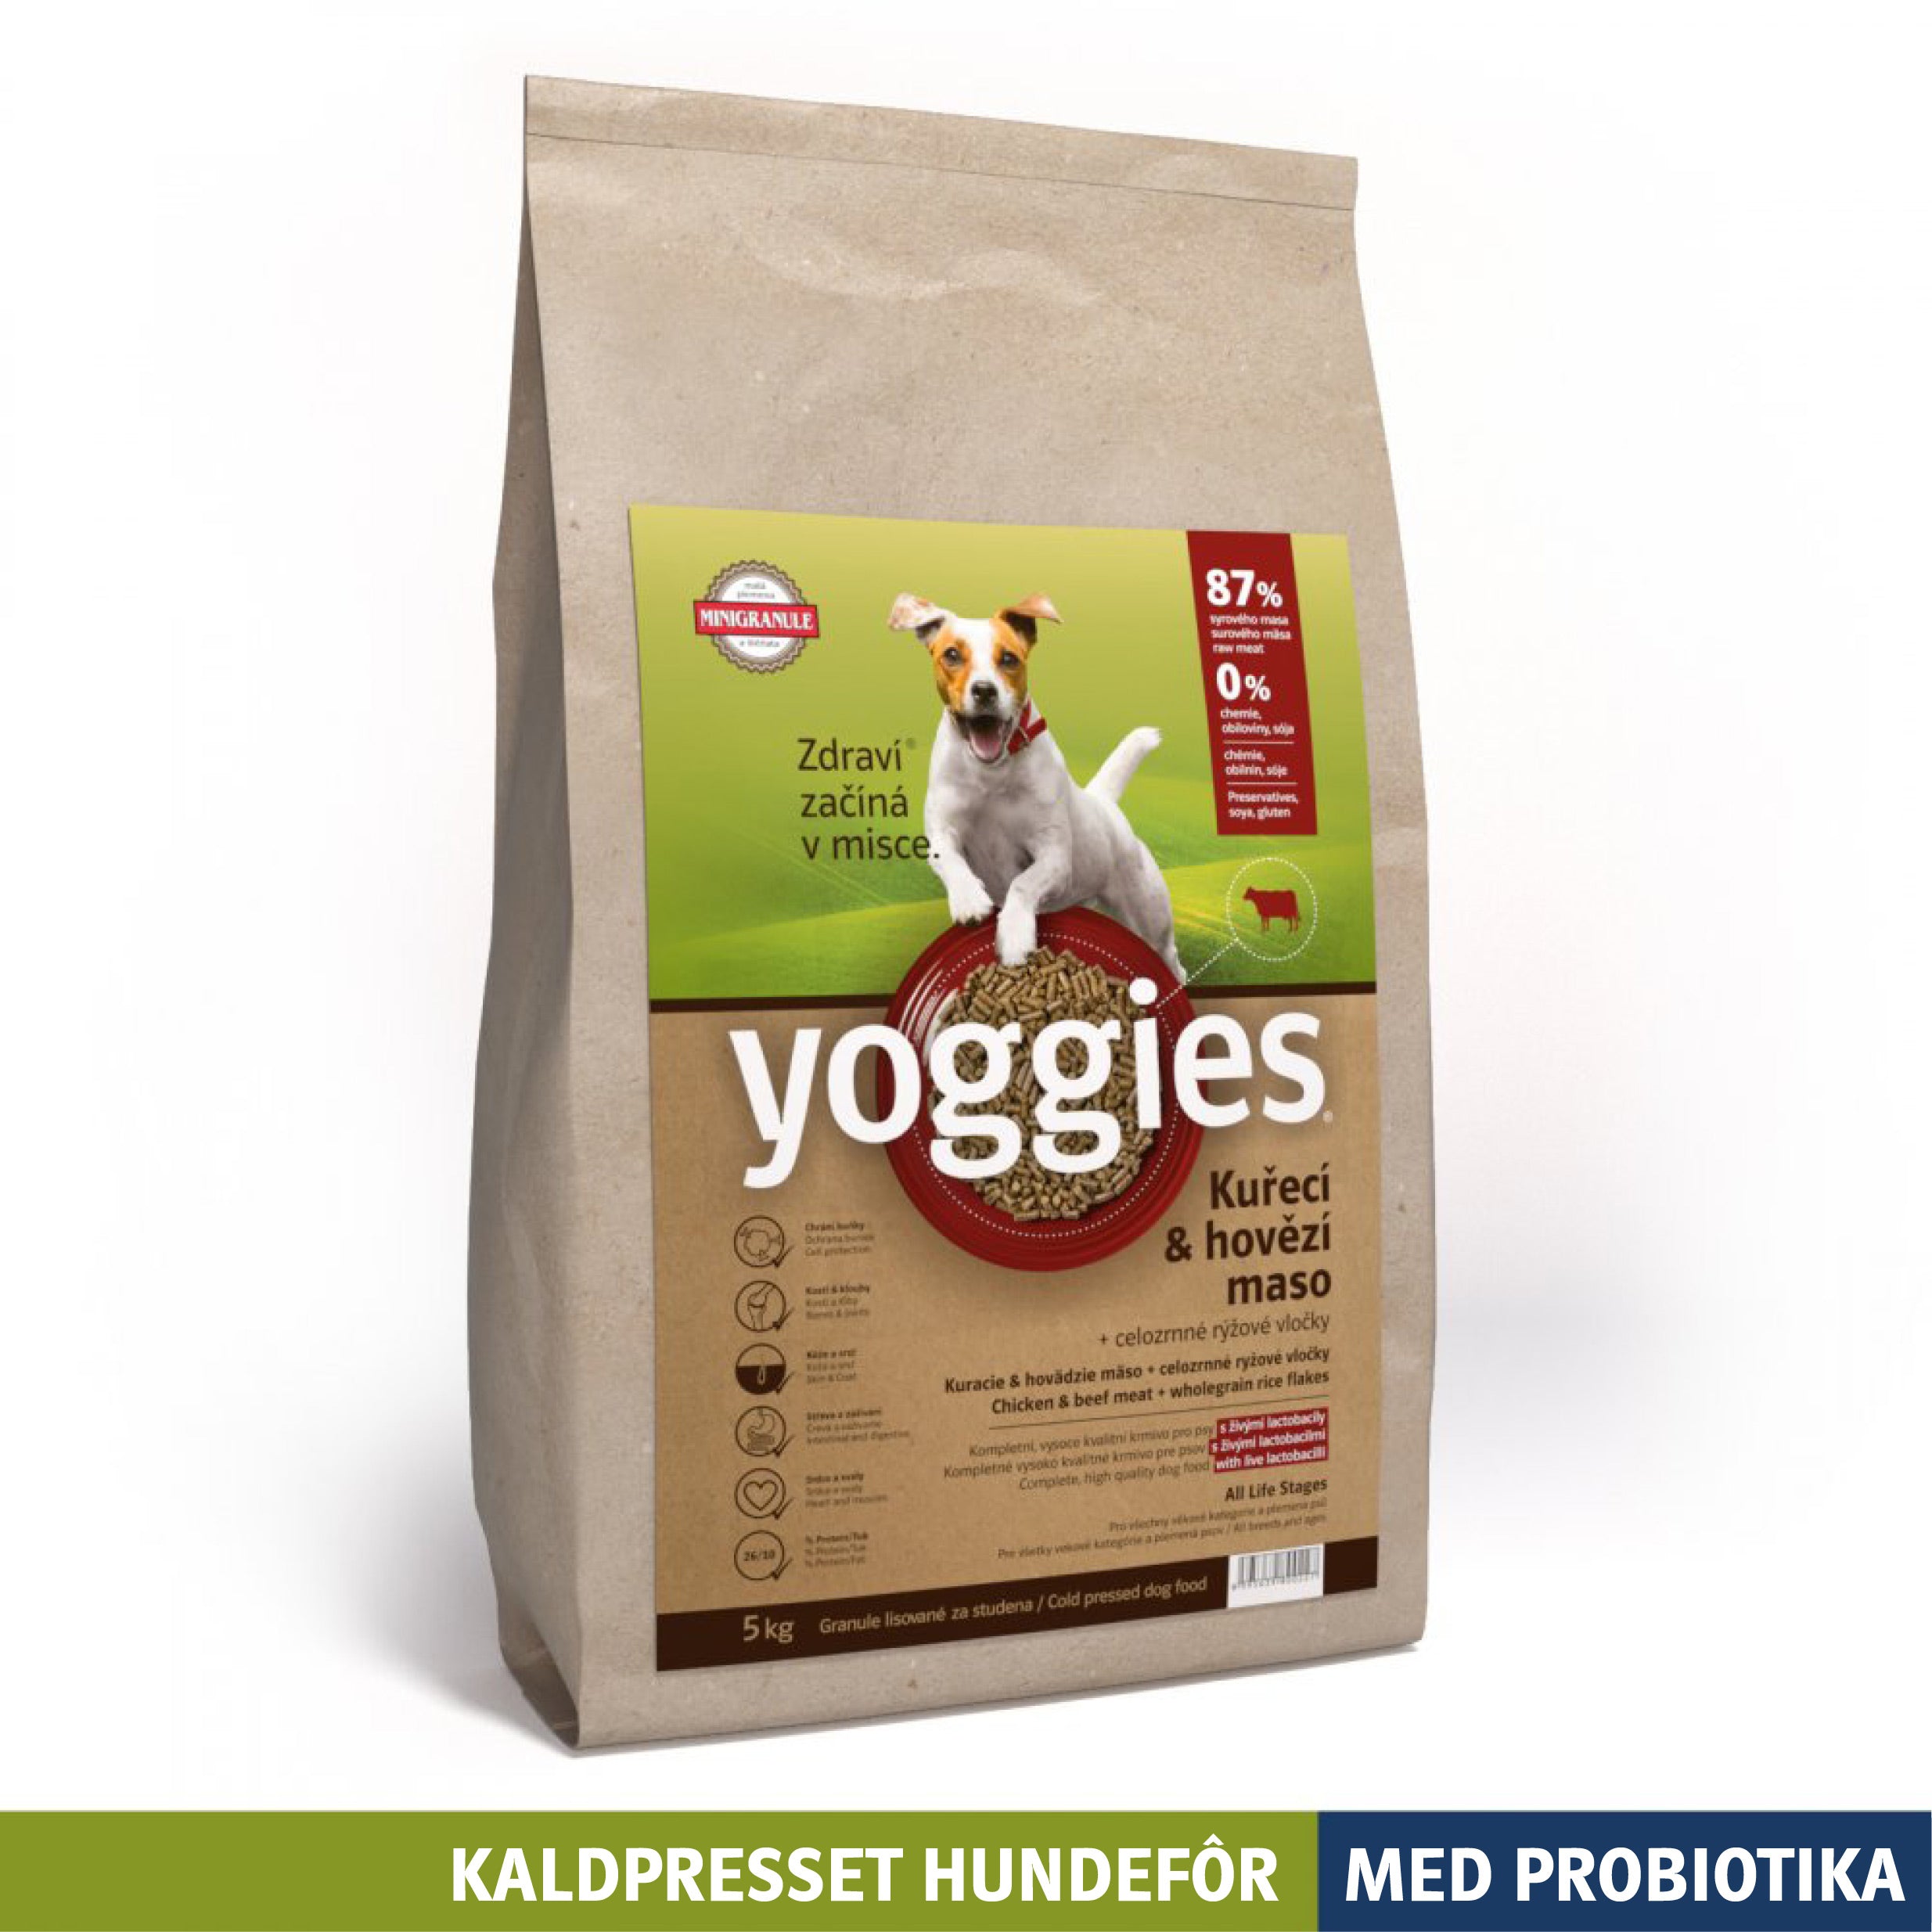 5 kg KYLLING & STORFE med probiotika MINI - kaldpresset hundefôr YOGGIES